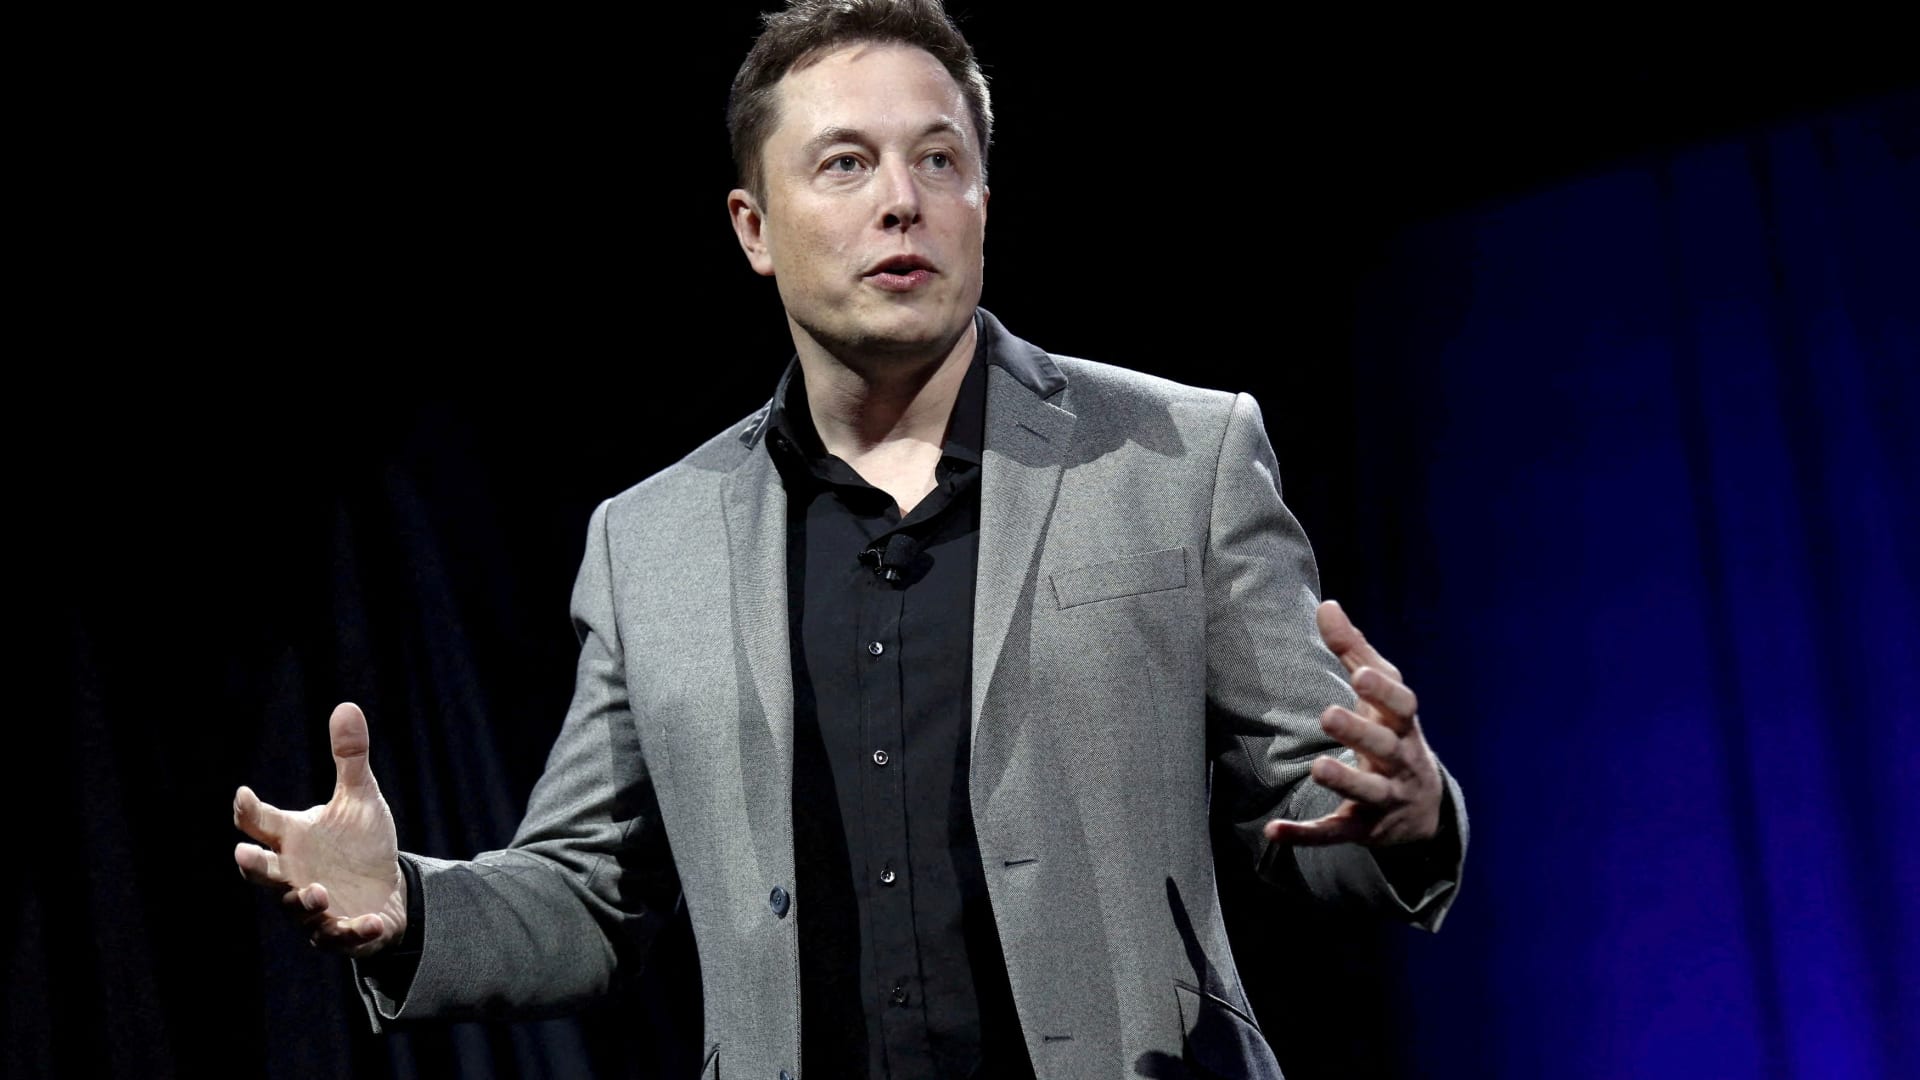 Tesla comes in light on revenue beats on earnings – CNBC